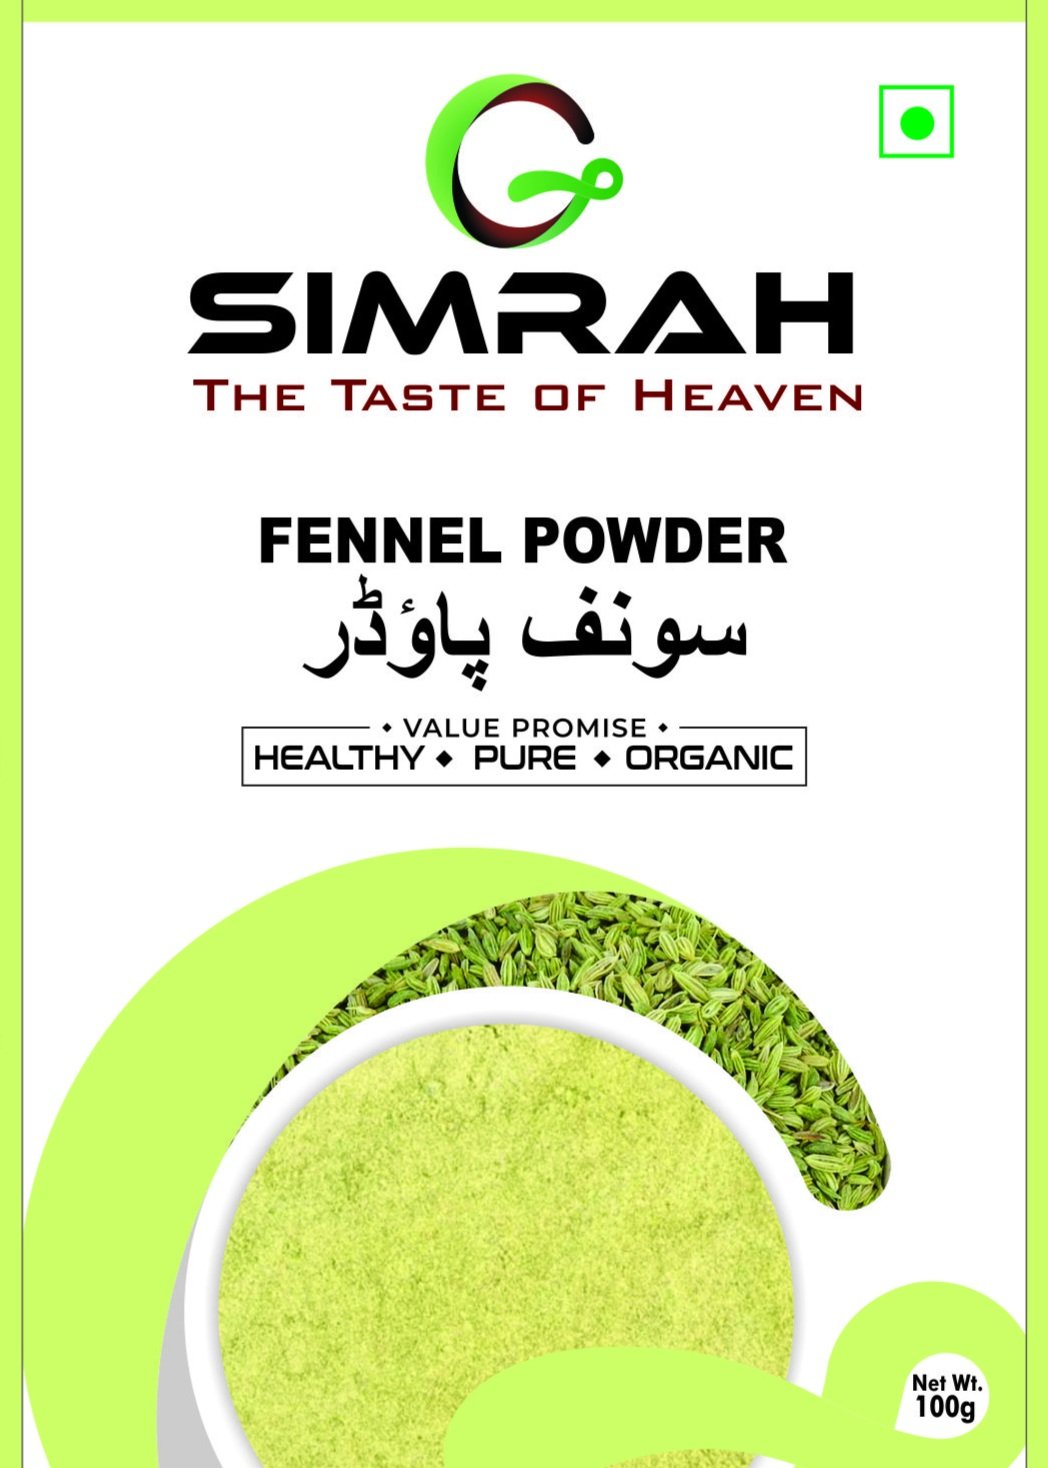 Premium sonuf powder